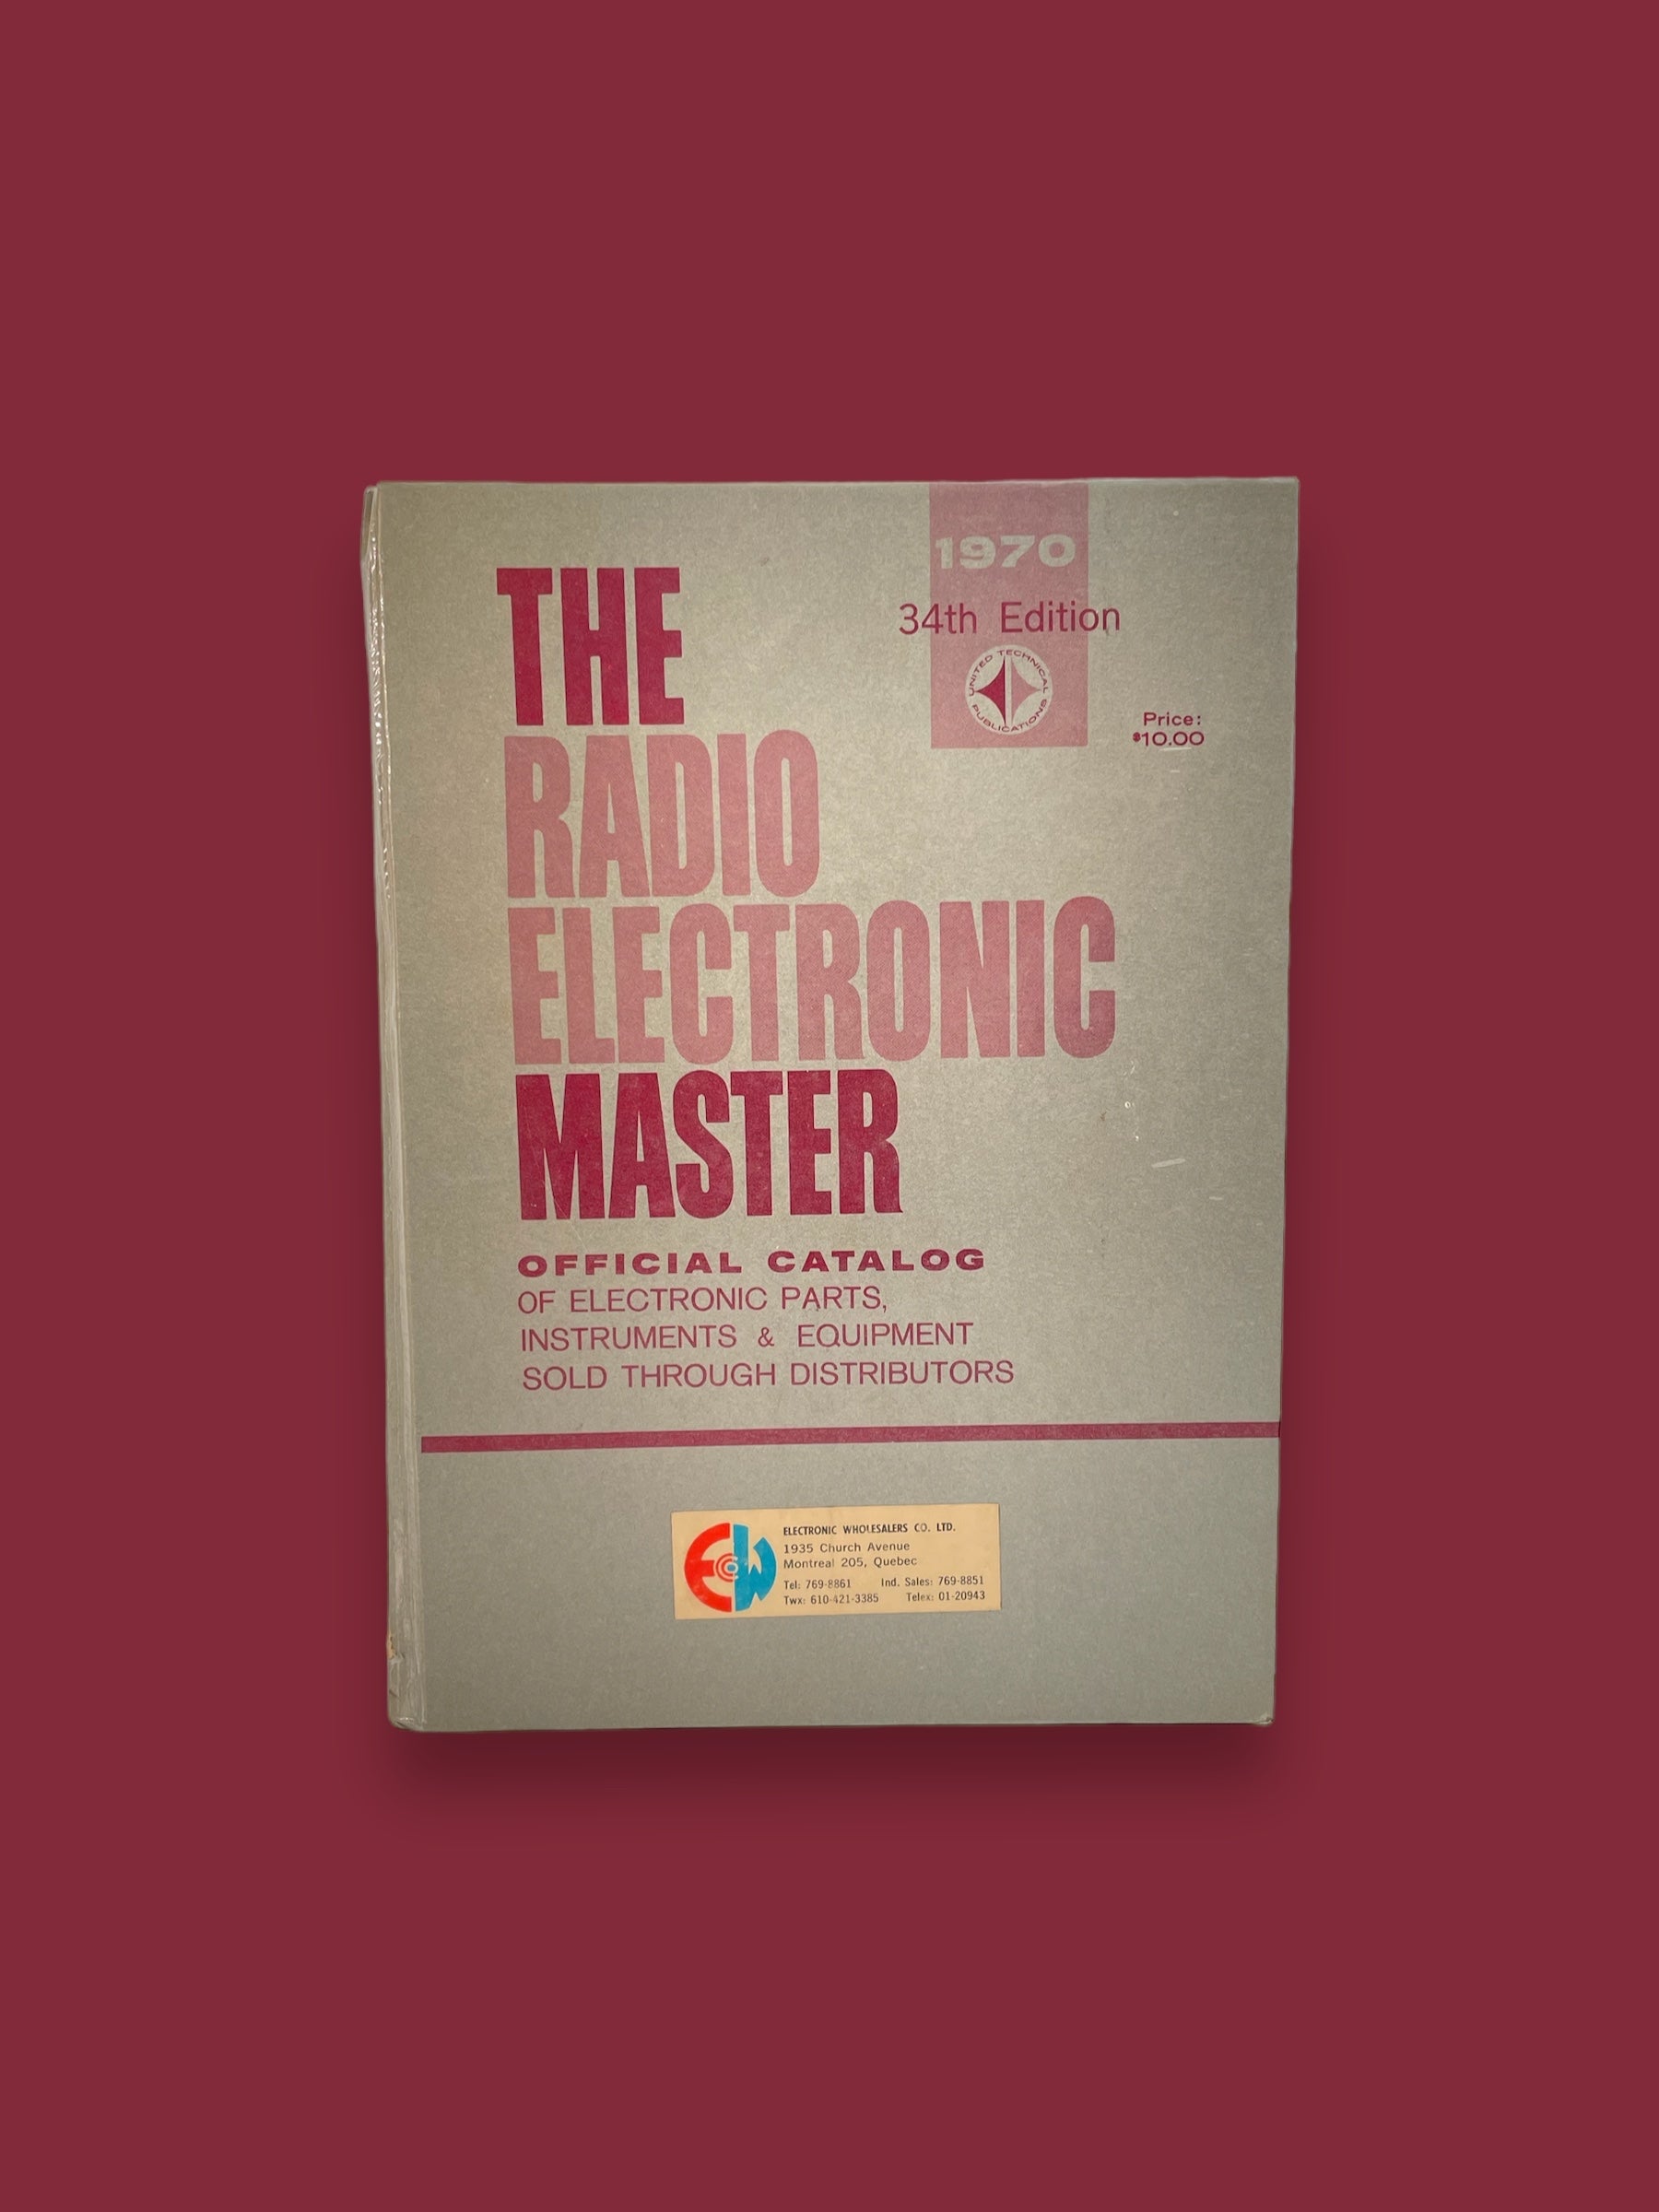 Vintage 34e édition de 1970 de "The Radio Electronic Master"